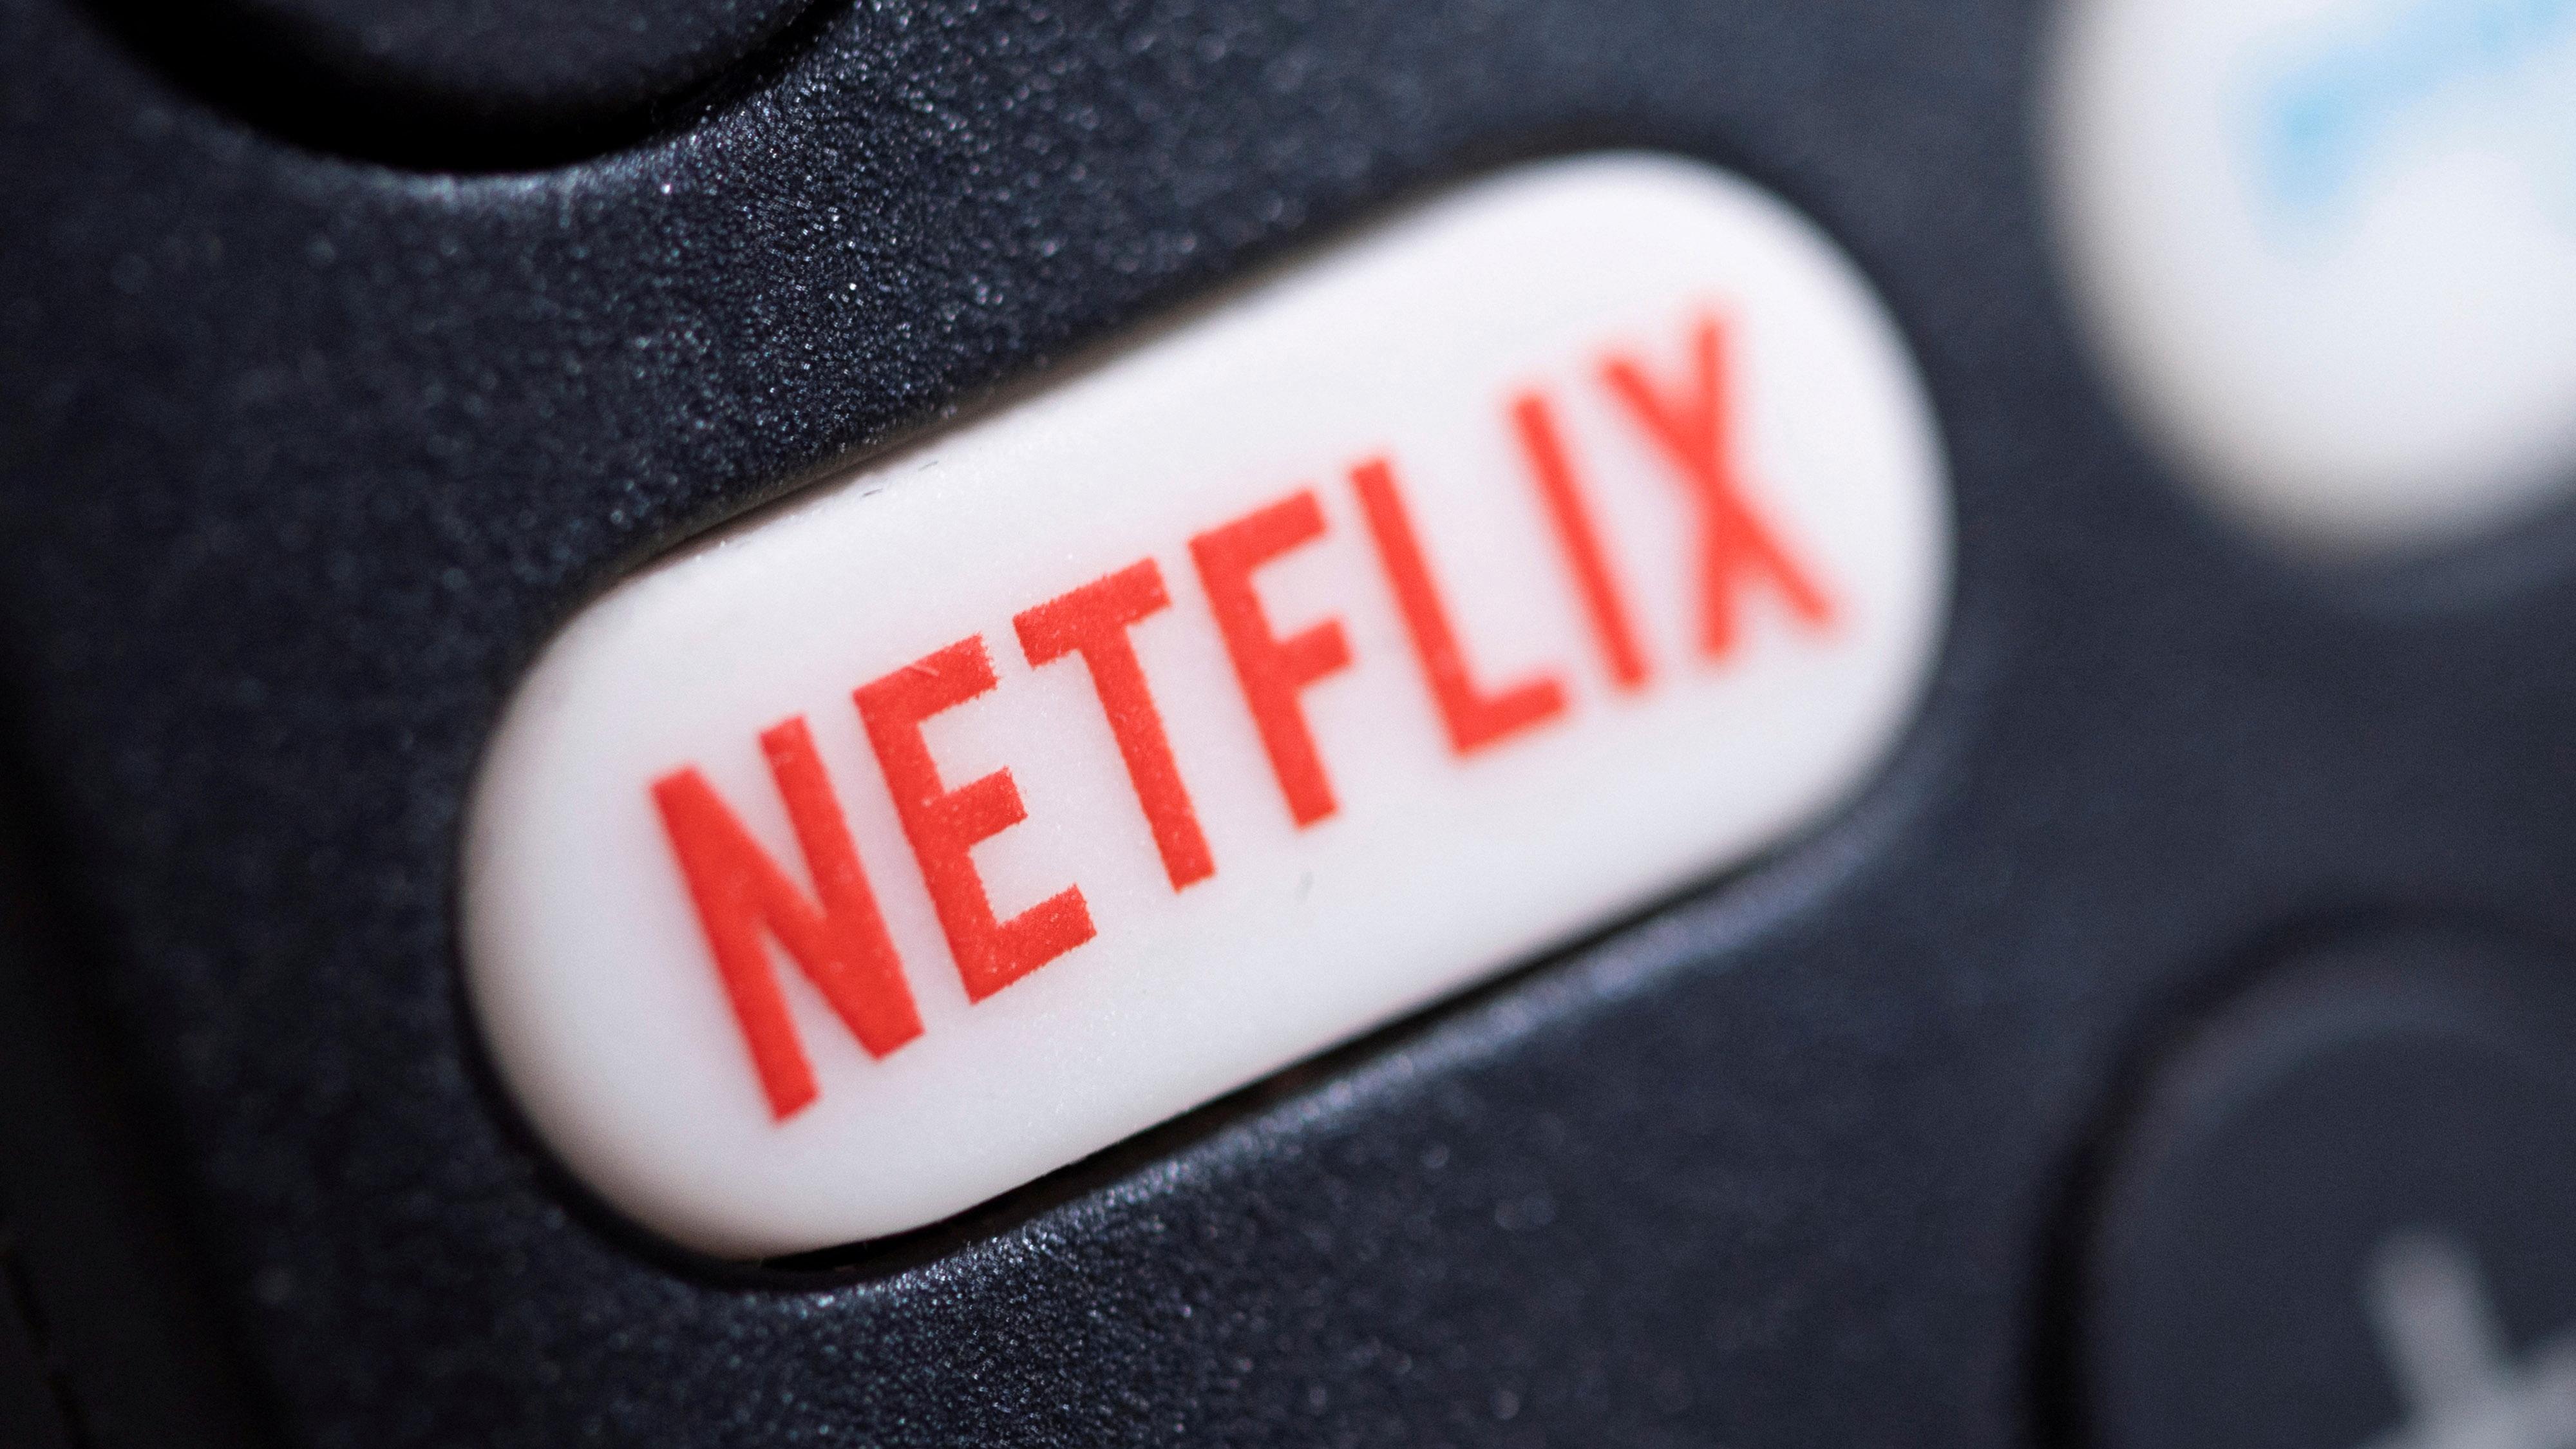 Avis: Netflix fremskynder reklameplanene sine